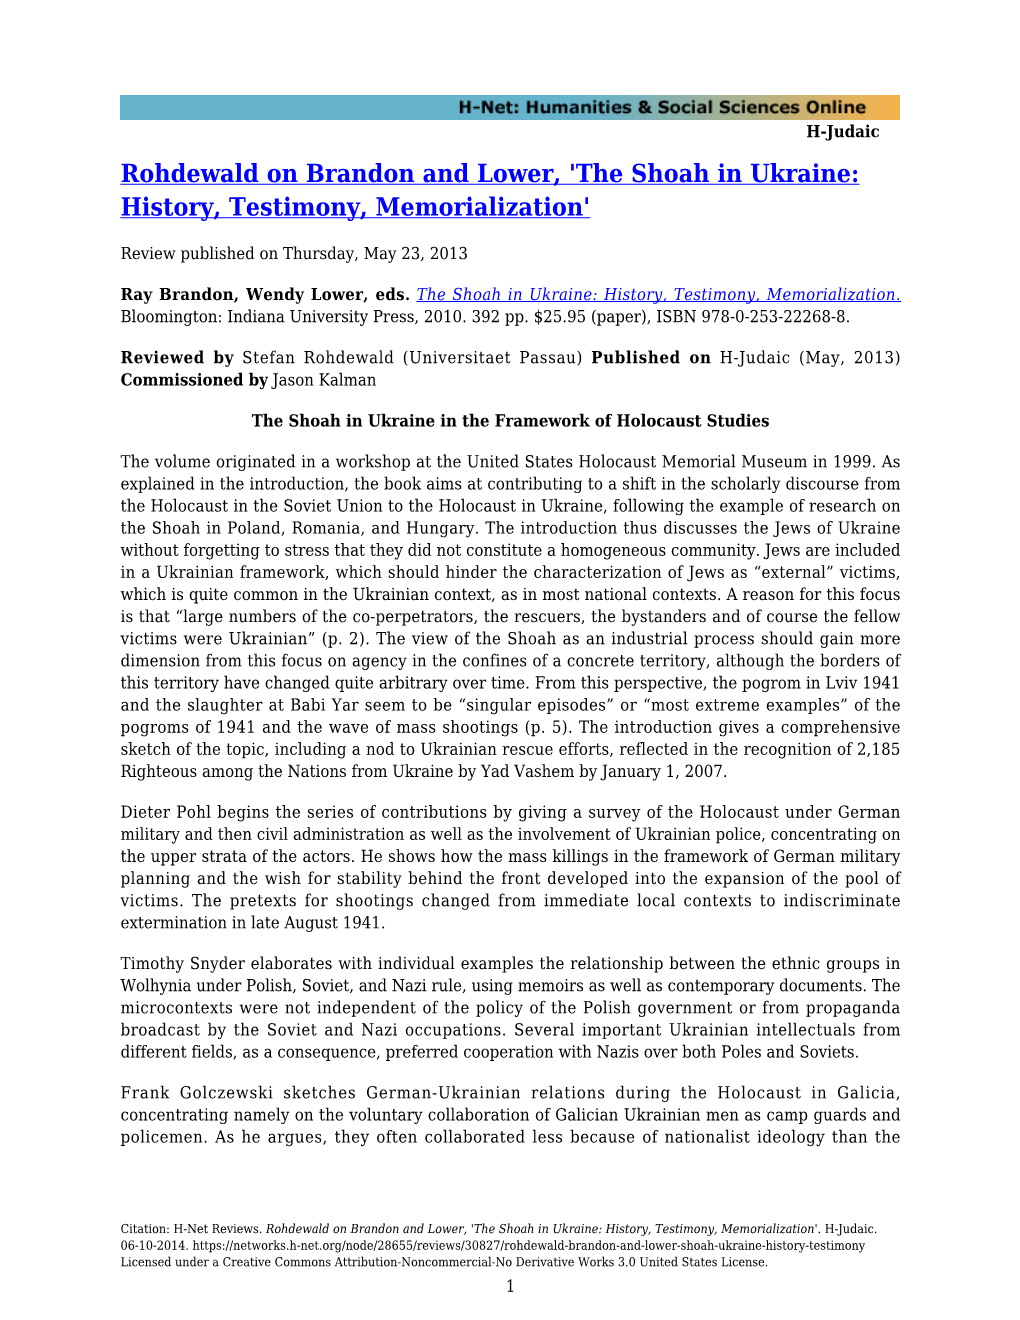 Rohdewald on Brandon and Lower, 'The Shoah in Ukraine: History, Testimony, Memorialization'